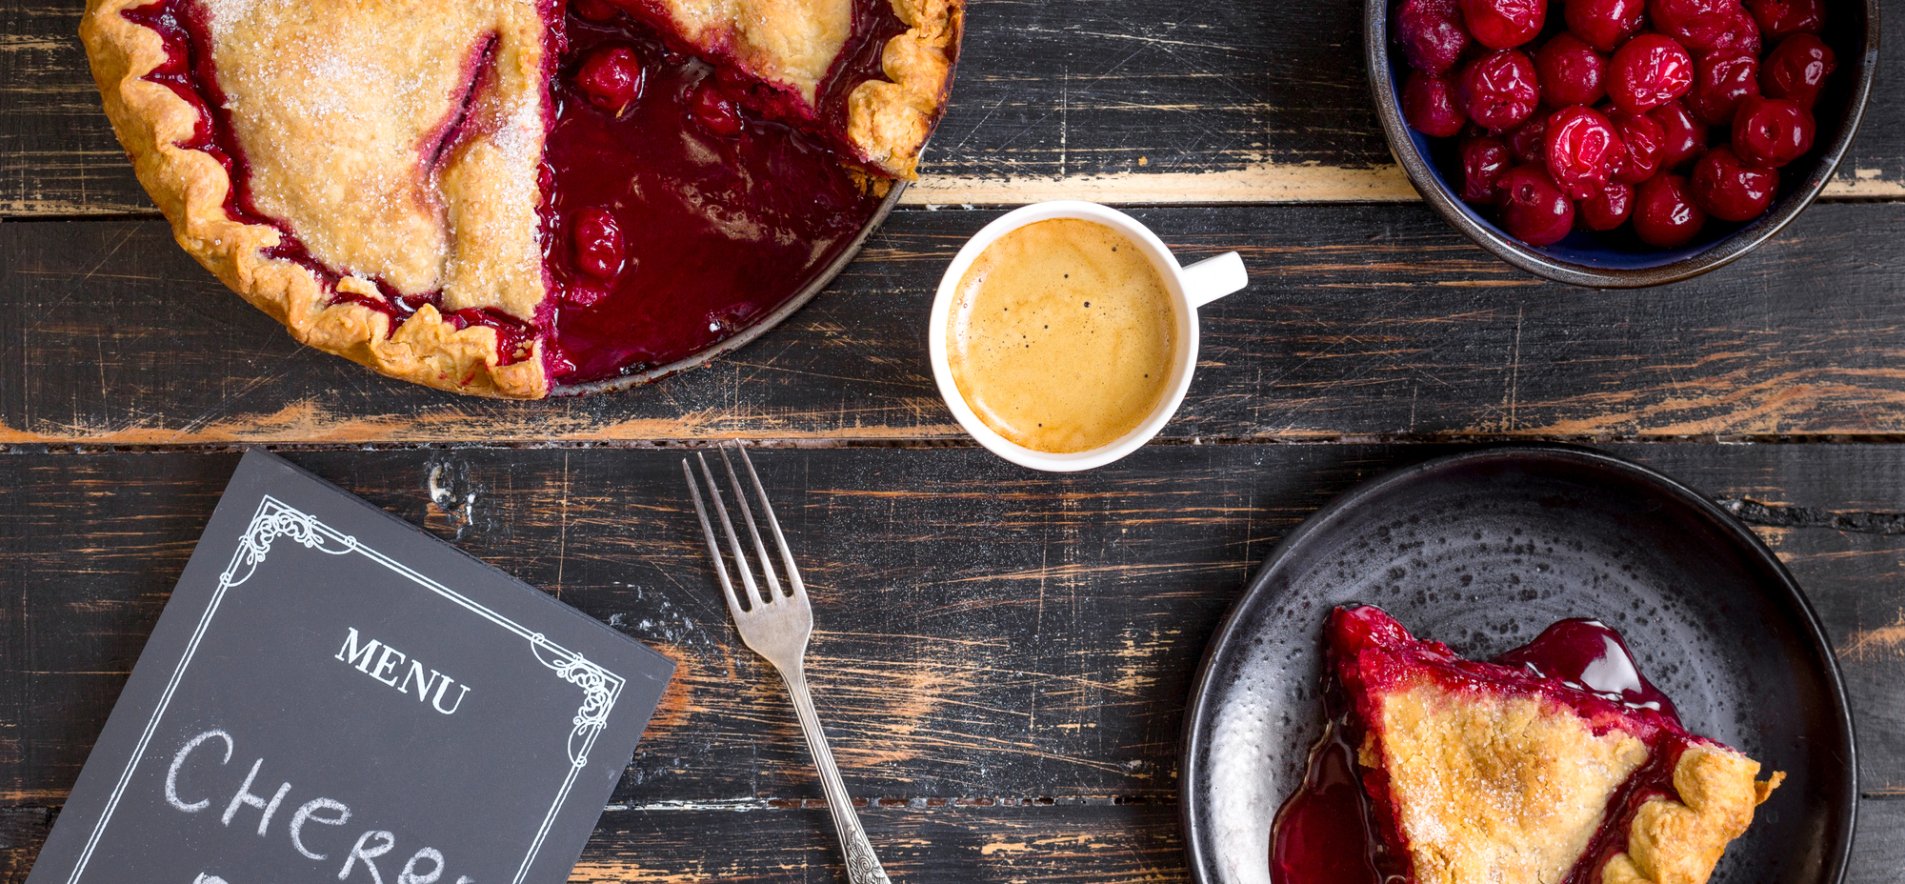 Вишневый пирог, тарелка с вишнями, кусок вишневого пирога и чашка кофе на деревянном столе.